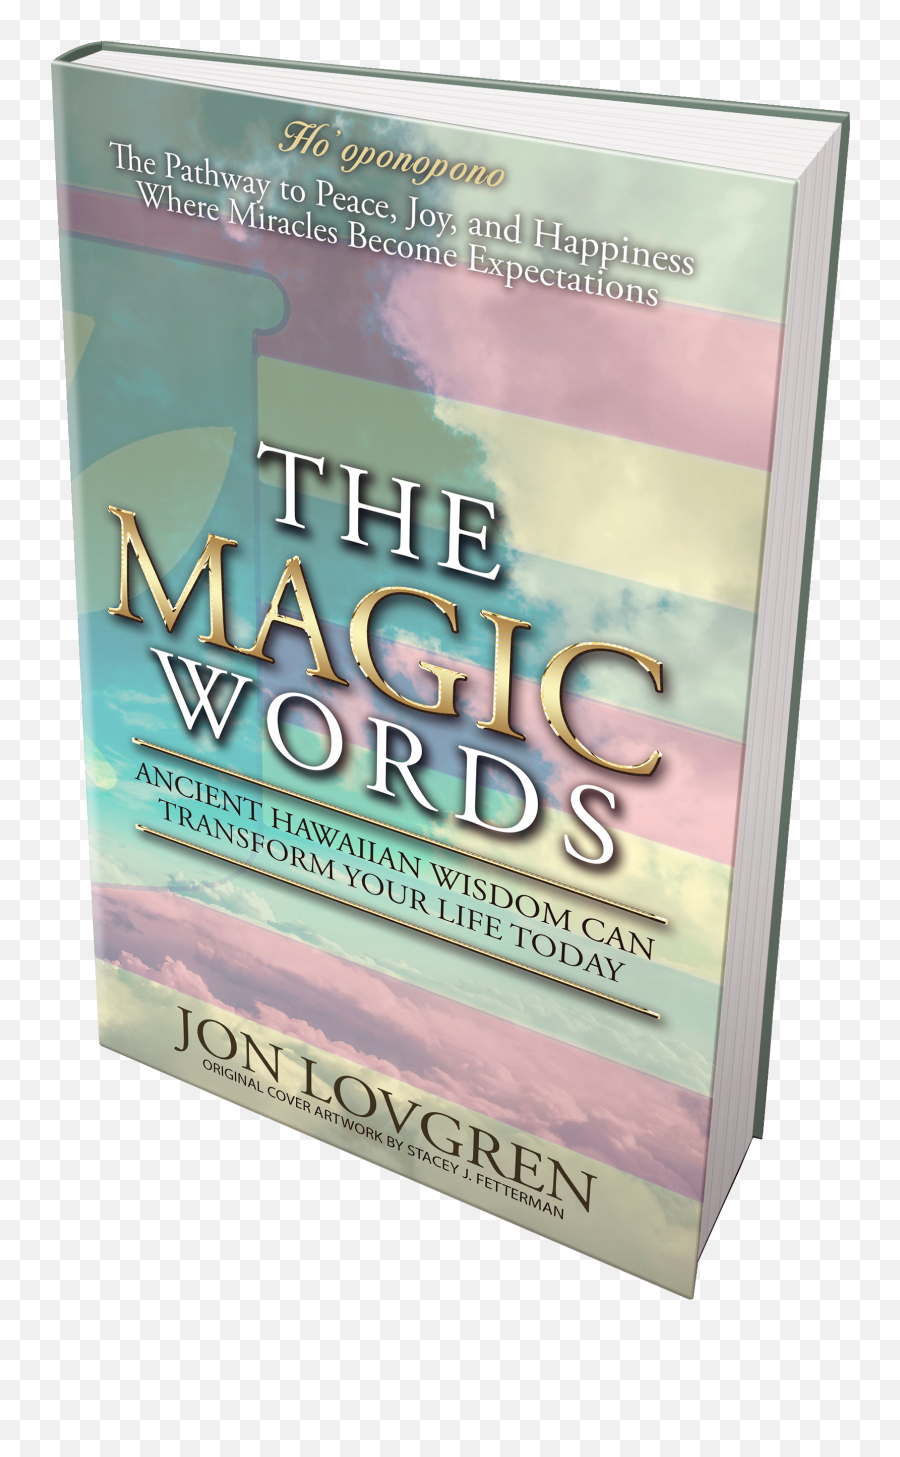 The Magic Words Jonlovgren - Profile Pinterest Horizontal Emoji,Molecules Of Emotion Book Cover Images